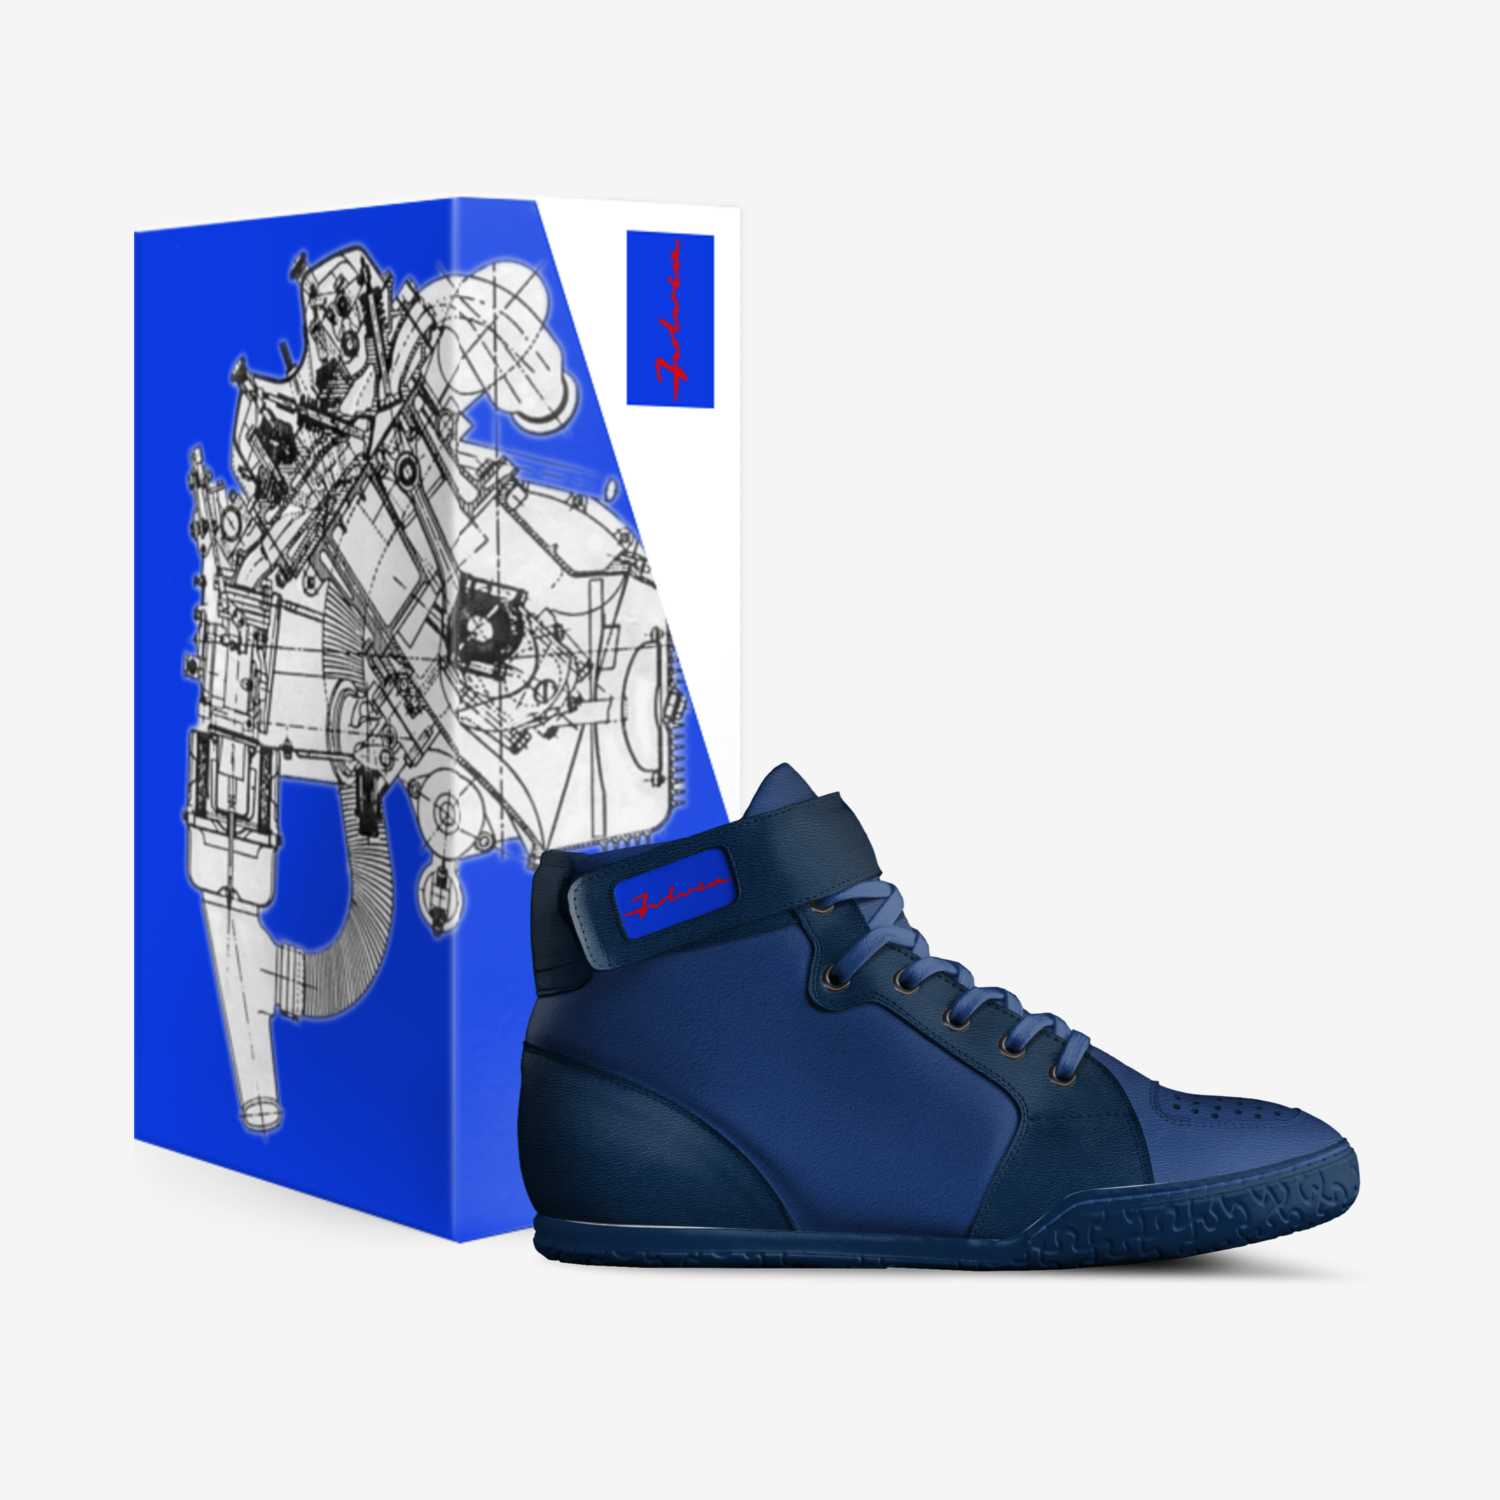 Fulvia Blu lancia custom made in Italy shoes by Vittorio Negri | Box view